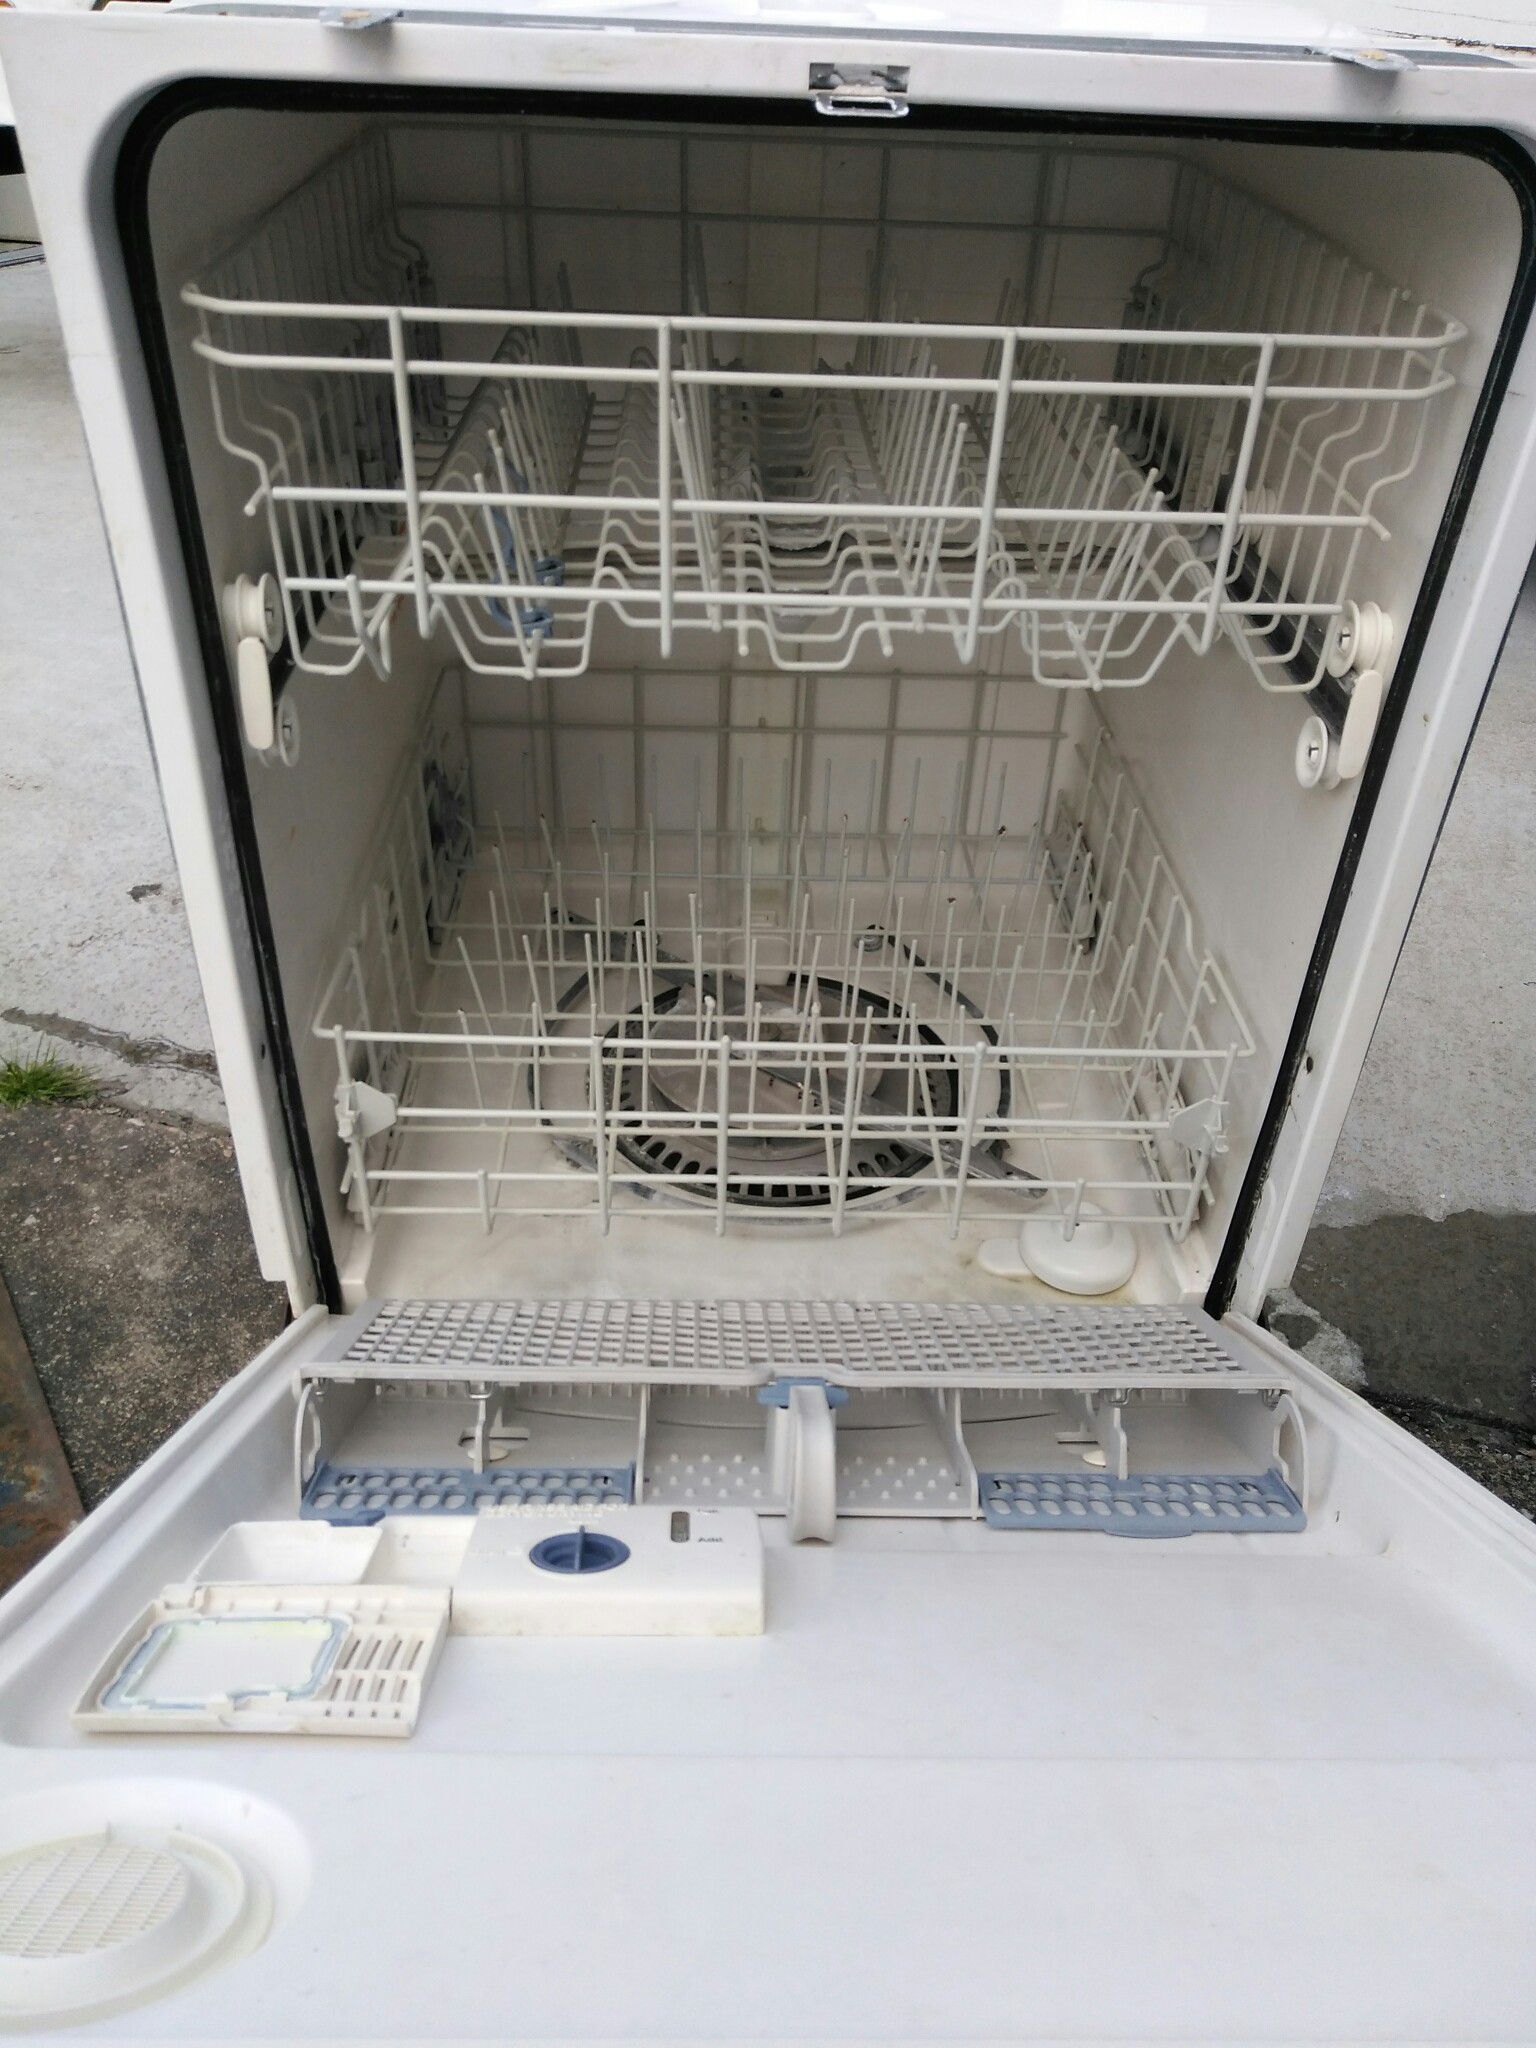 Whirlpool dishwaher